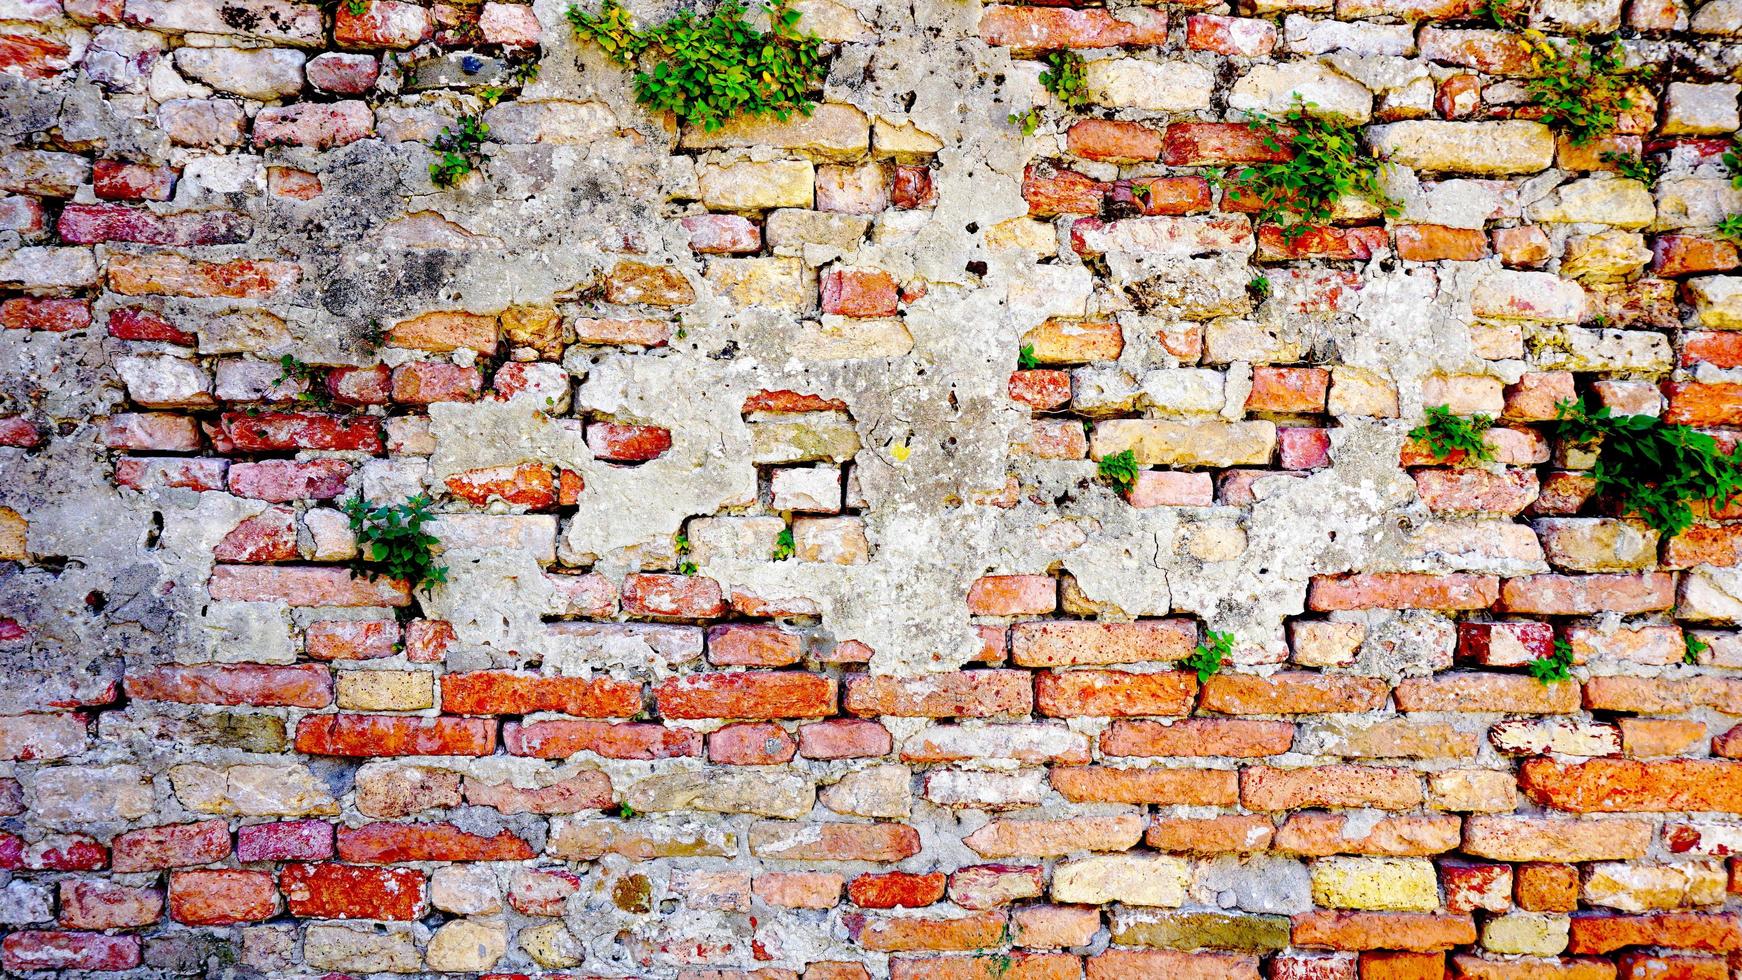 decay brick wall and plant horizontal in Burano photo